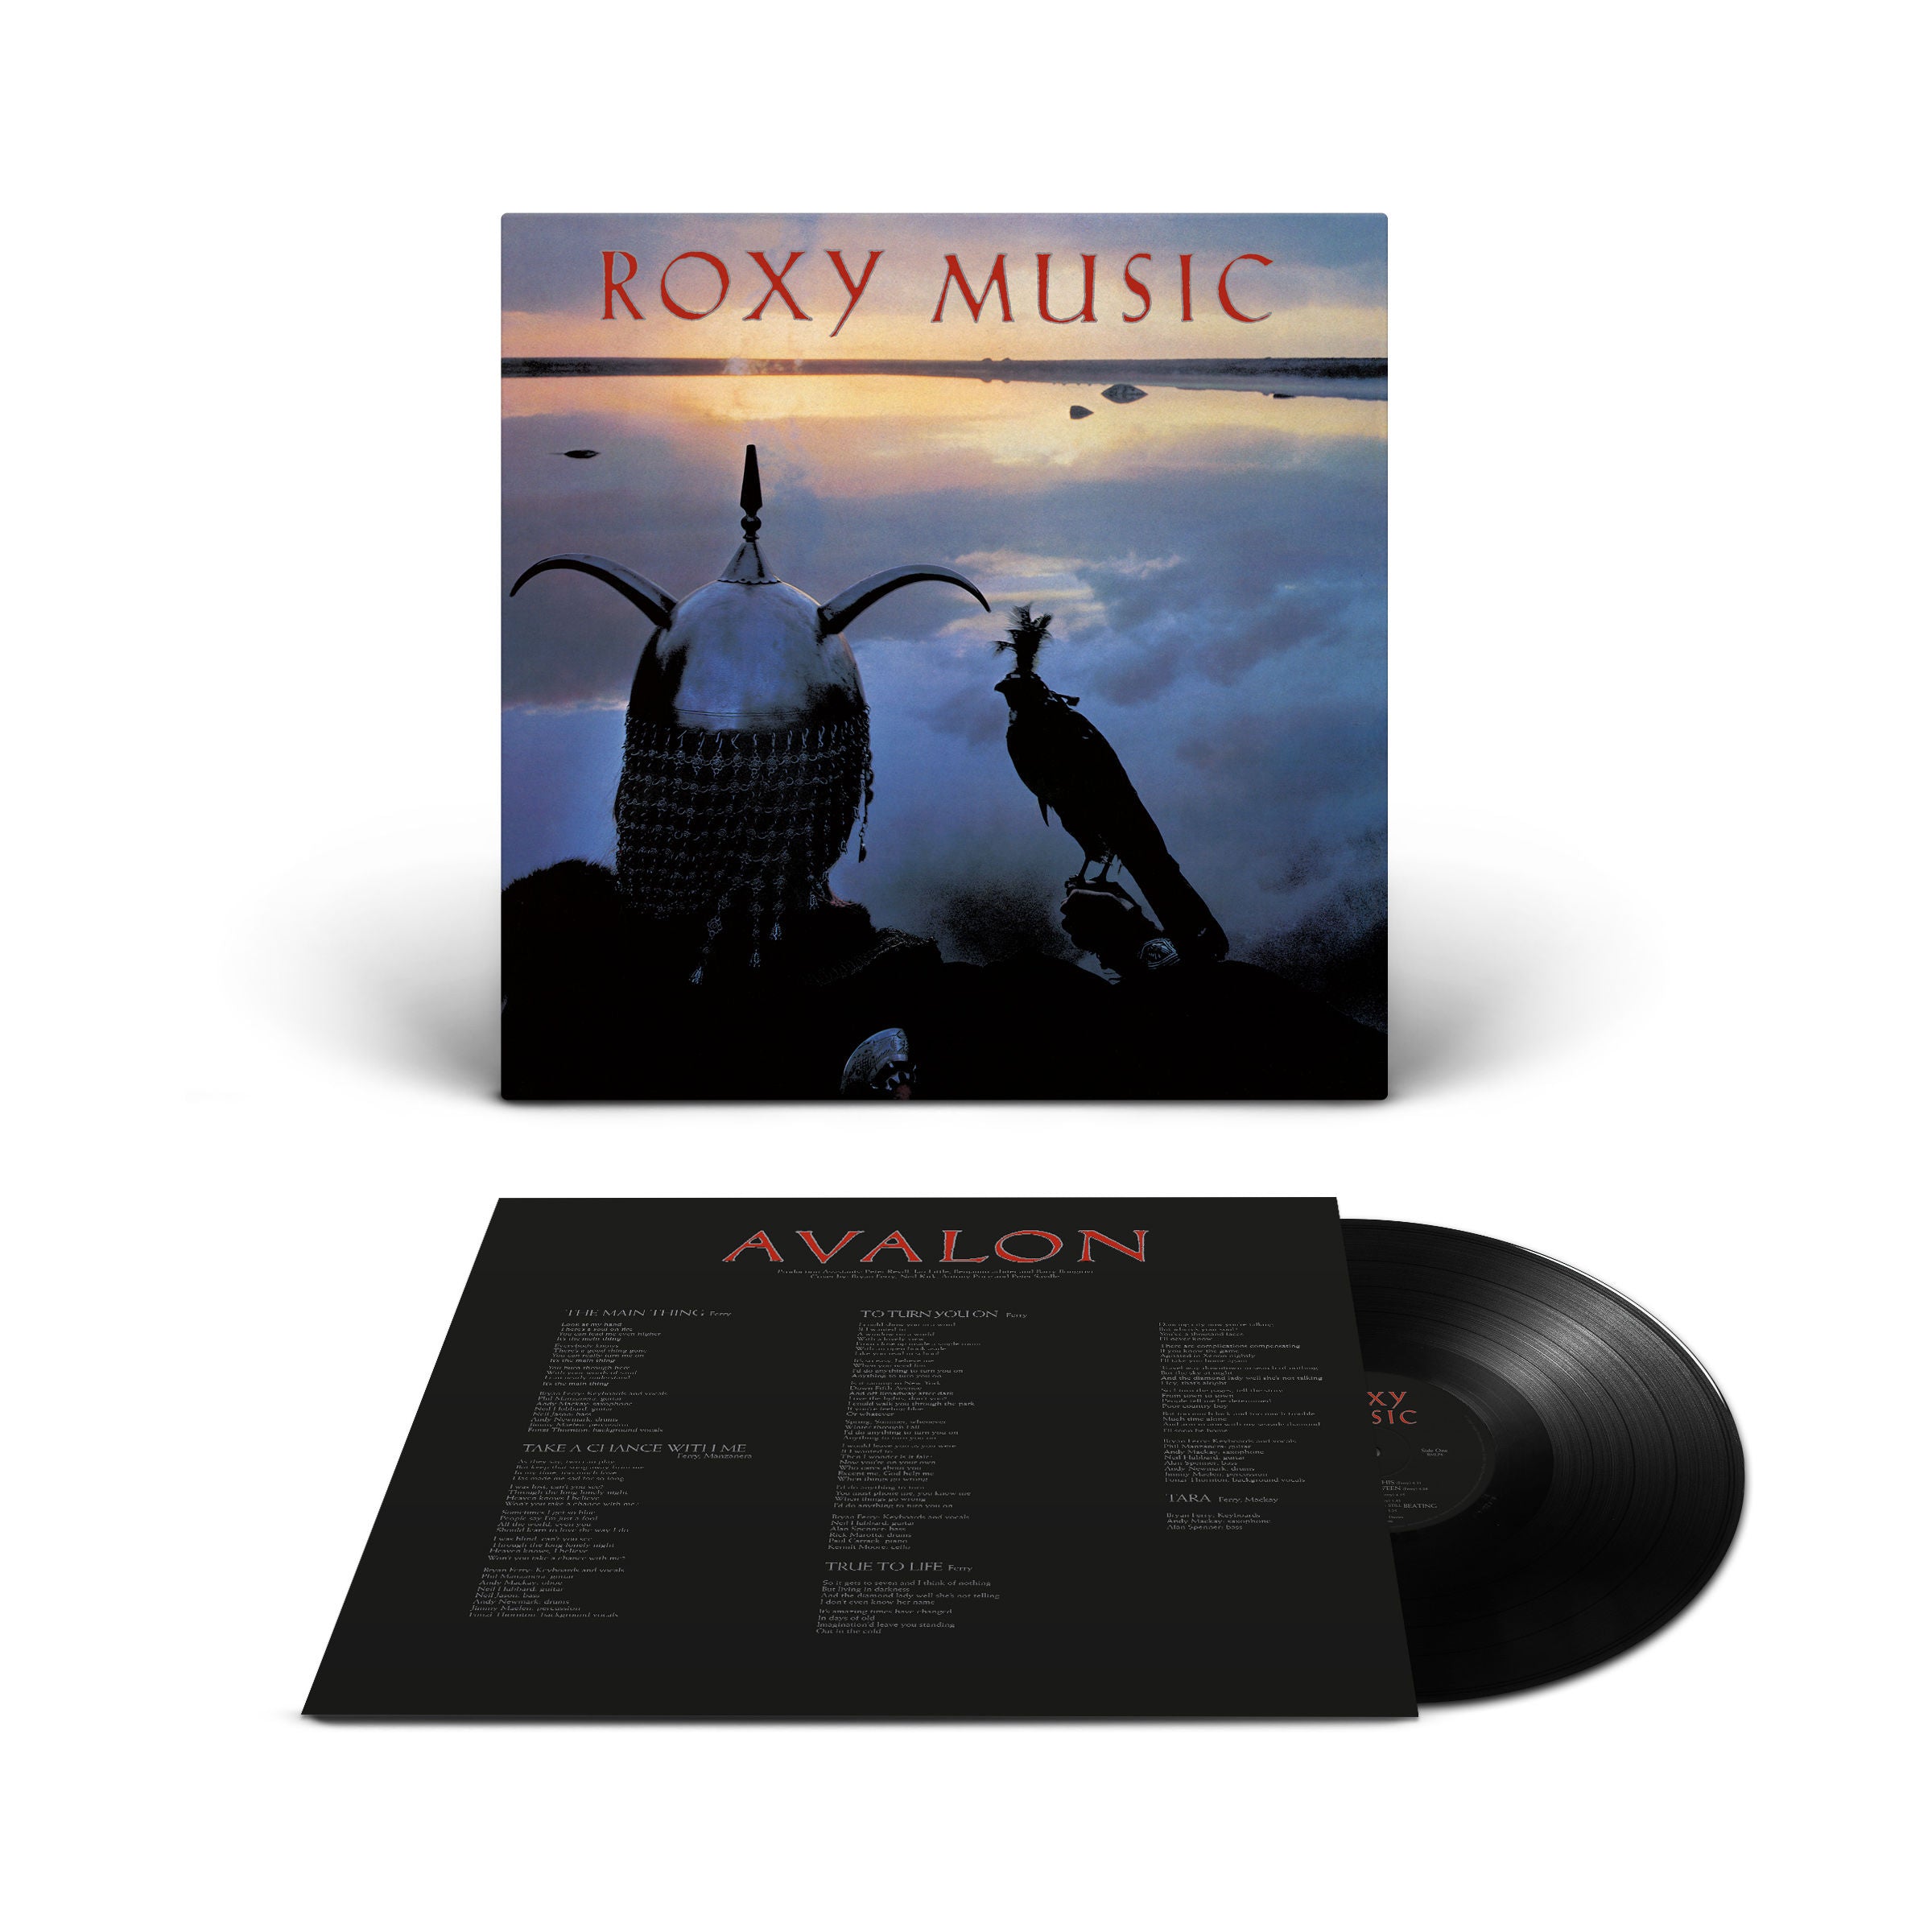 Roxy Music - Avalon: Half Speed Master Vinyl LP